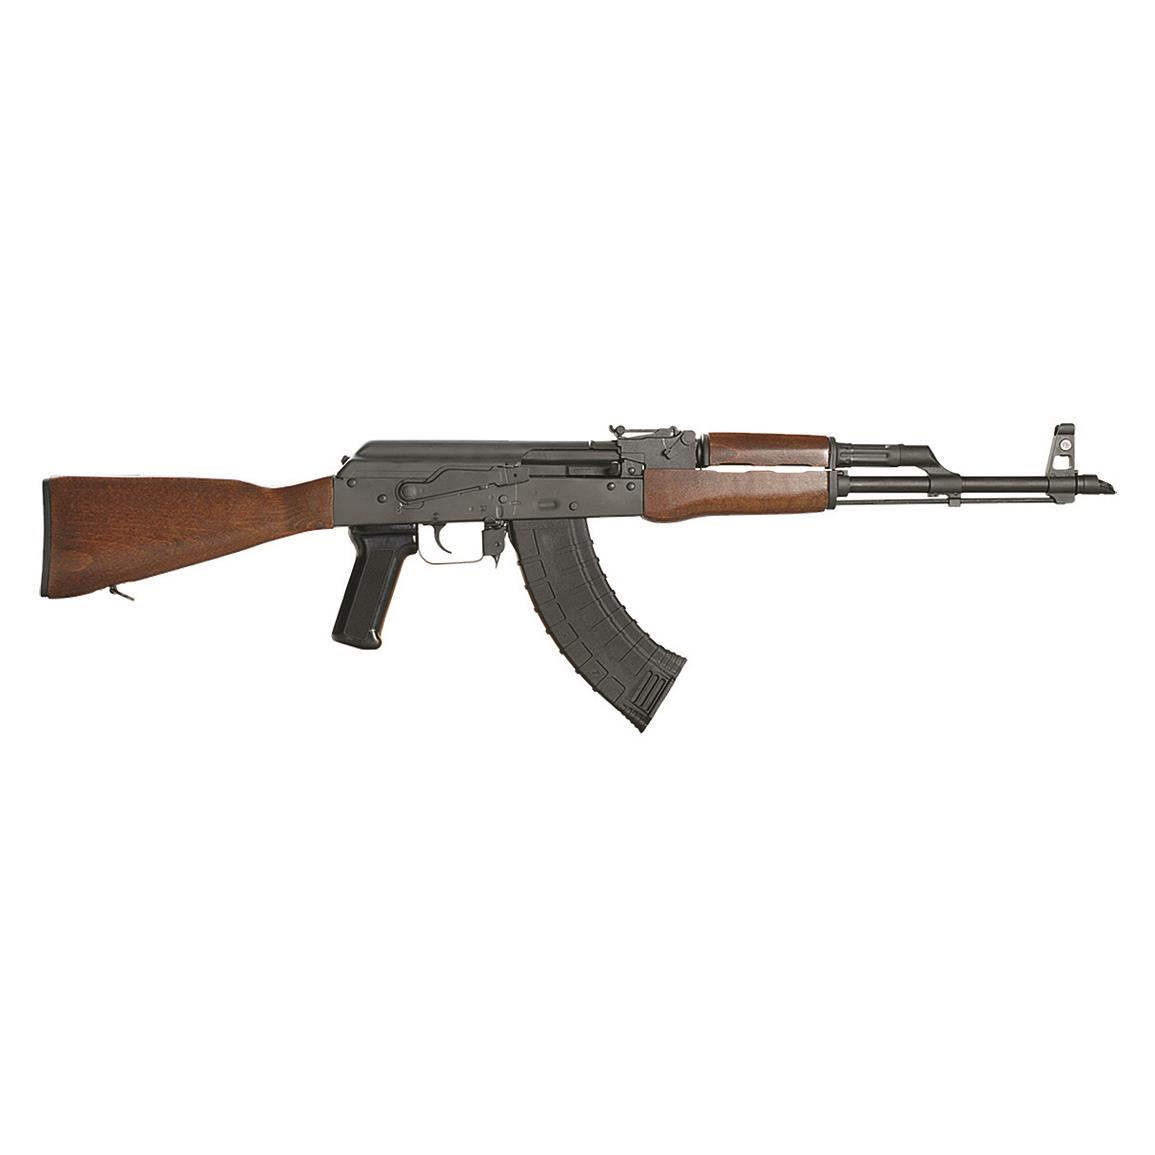 Blackheart Model B10W AK-47, Semi-Automatic, 7.62x39mm, 16.25" Barrel, 30+1 Rounds